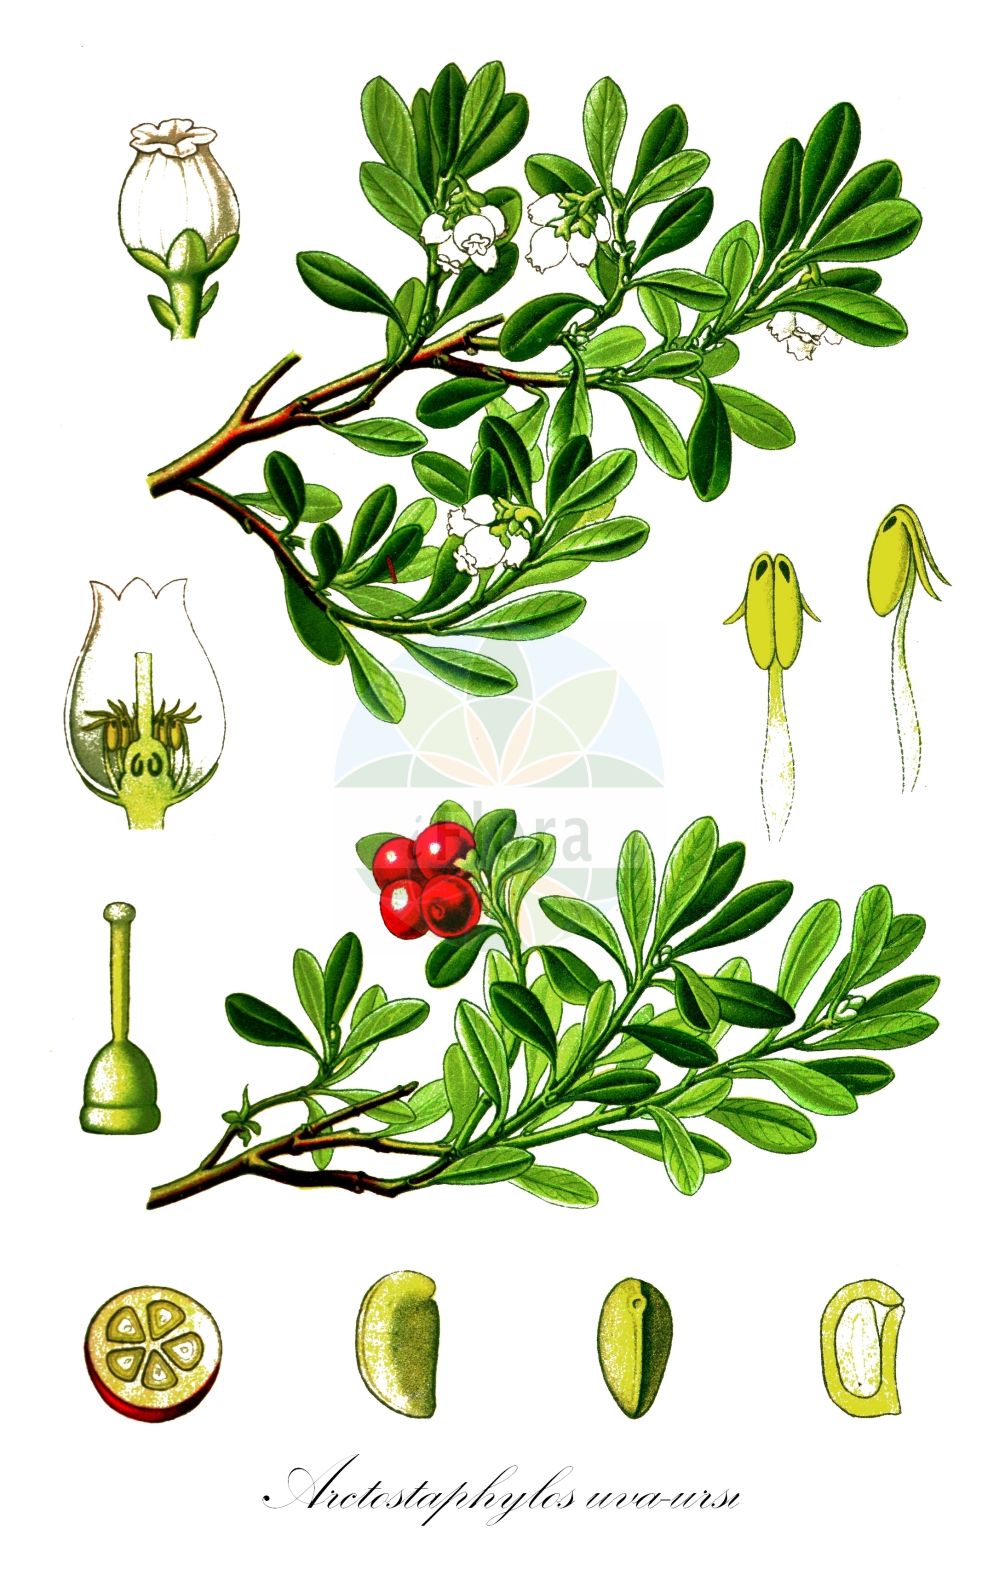 Historische Abbildung von Arctostaphylos uva-ursi (Immergrüne Bärentraube - Bearberry). ---- Historical Drawing of Arctostaphylos uva-ursi (Immergrüne Bärentraube - Bearberry).(Arctostaphylos uva-ursi,Immergrüne Bärentraube,Bearberry,Arbutus uva-ursi,Arctostaphylos uva-ursi,Immergruene Baerentraube,Arznei-Baerentraube,Sandbeere,Wolfsbeere,Bearberry,Kinnikinnick,Bear's Grape,Common Bearberry,Creashak,Hog Cranberry,Kinnikinick,Mealberry,Mountain Box,Red Bearberry,Sandberry,Arctostaphylos,Bärentraube,Manzanita,Ericaceae,Heidekrautgewächse,Heath family,Thomé (1885))